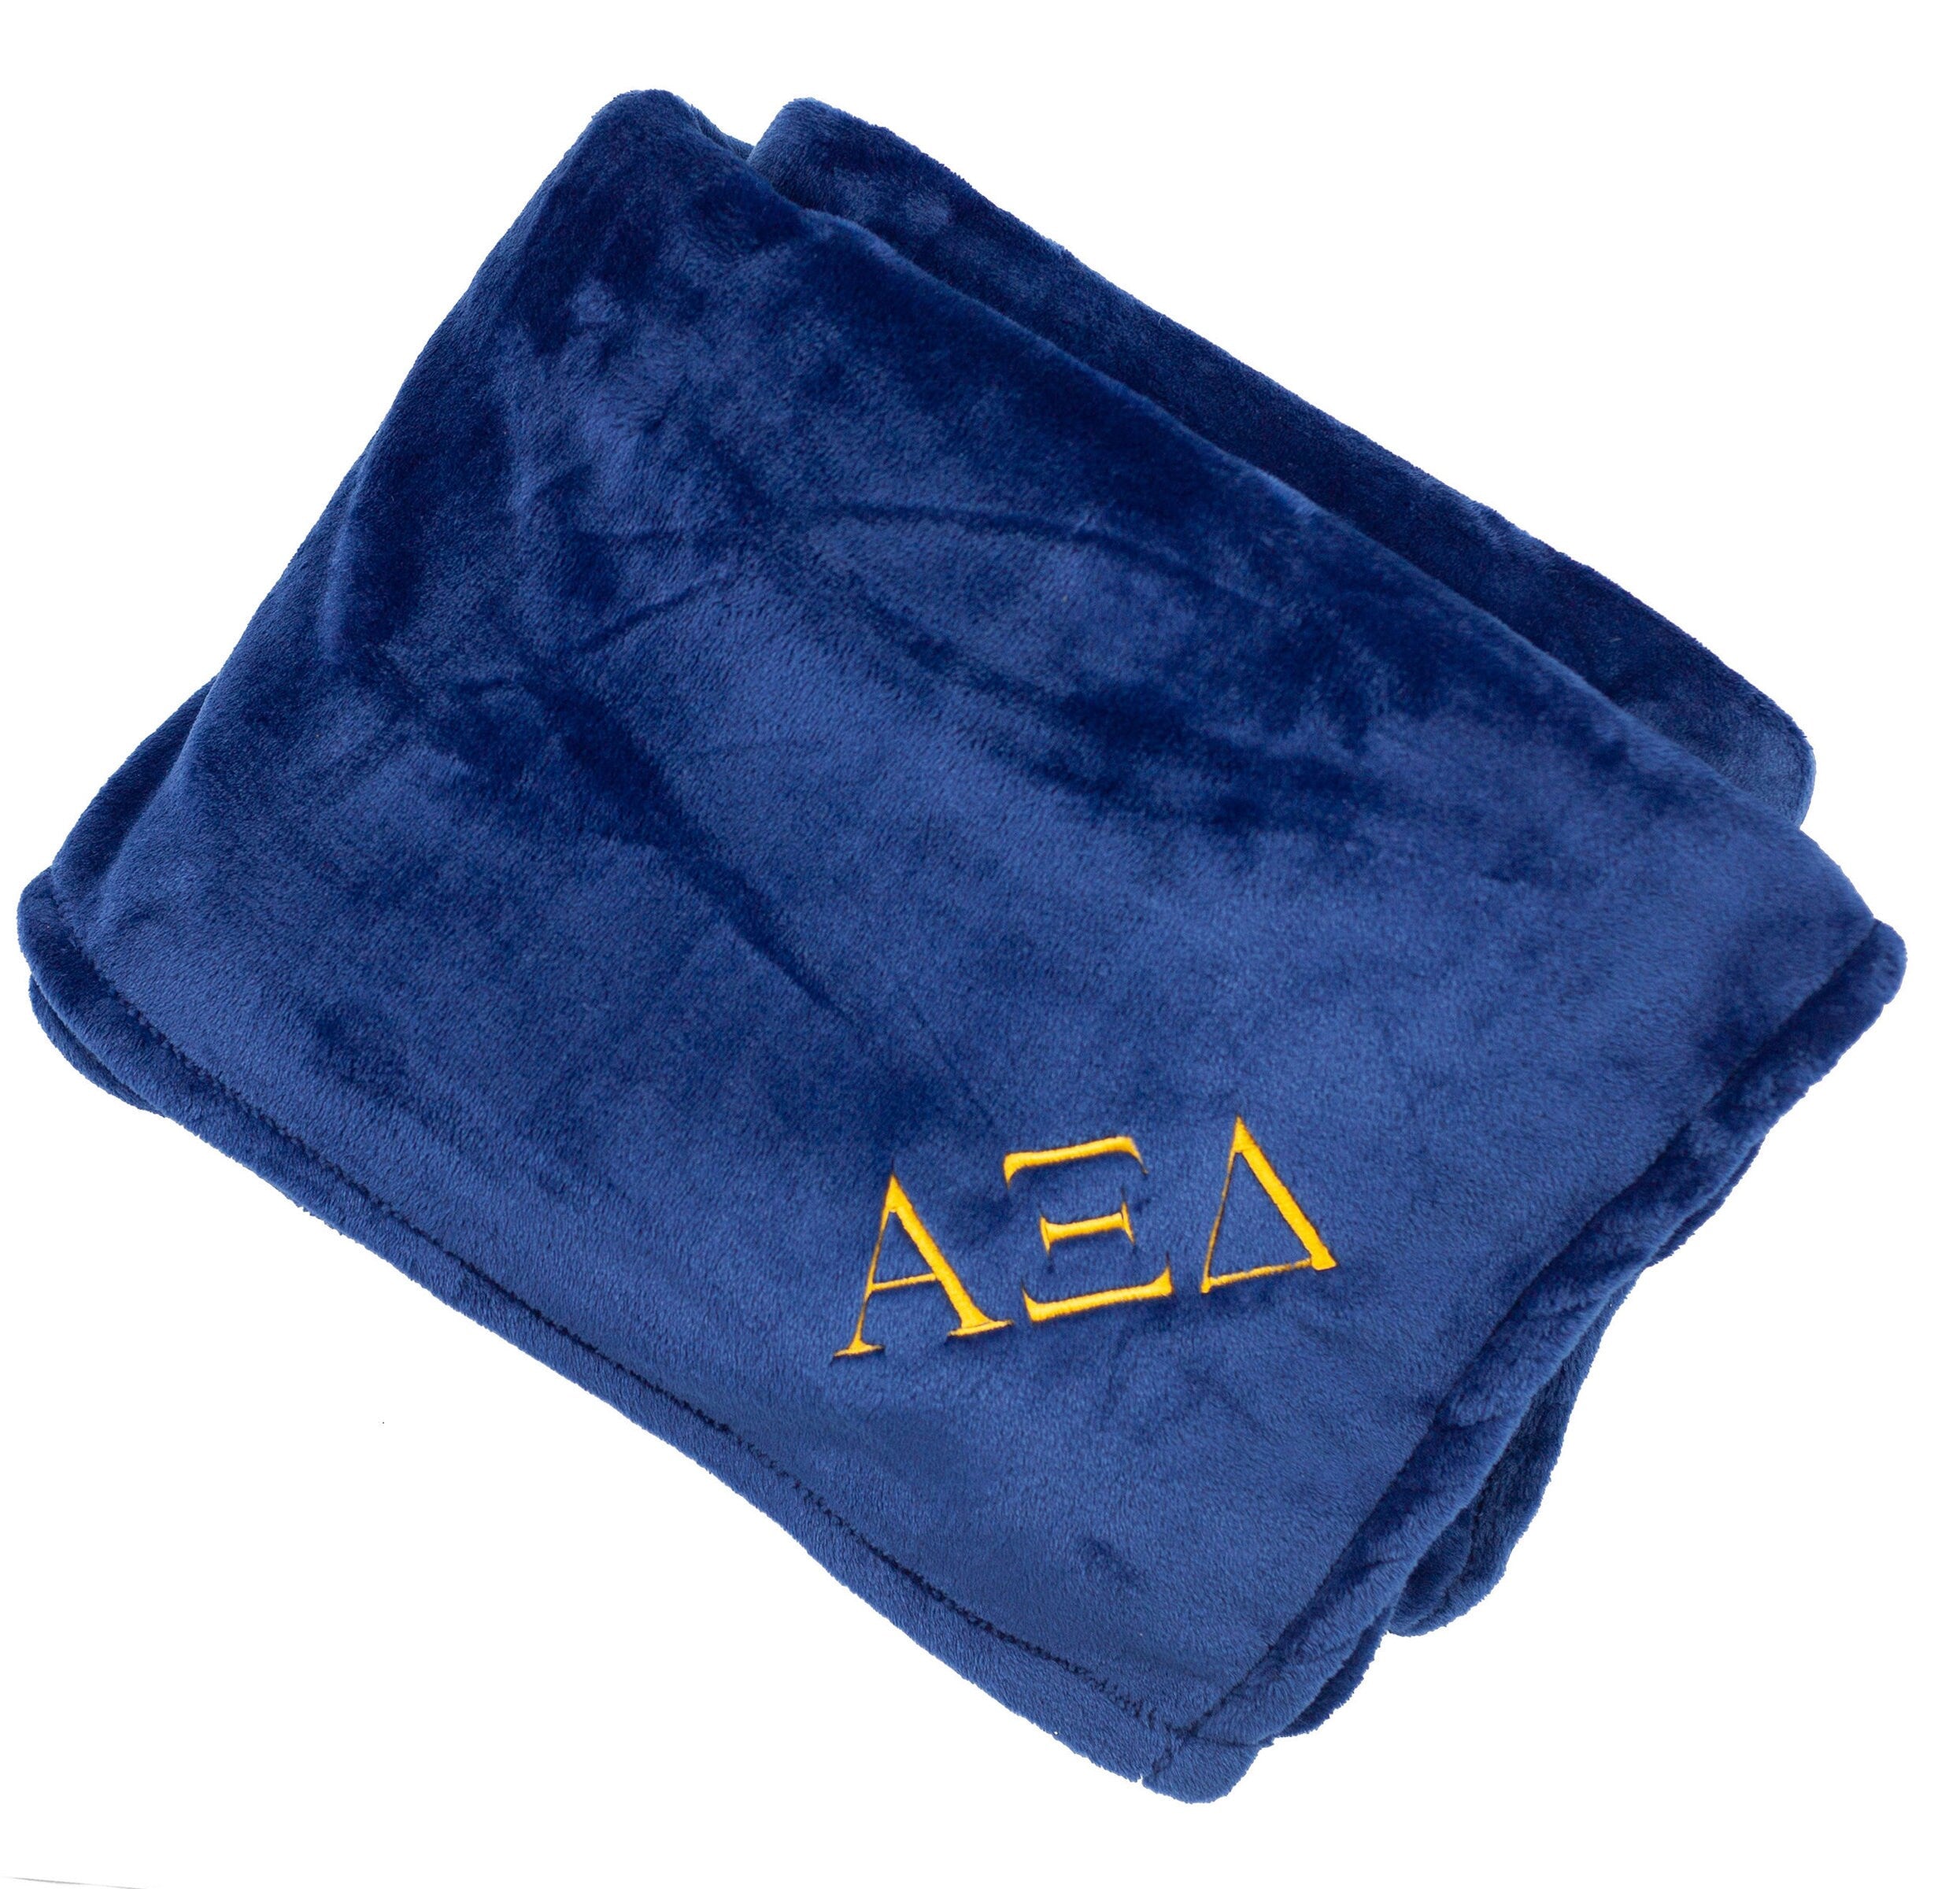 Alpha Xi Delta Plush Throw Blanket - Navy/Gold - Go Greek Chic